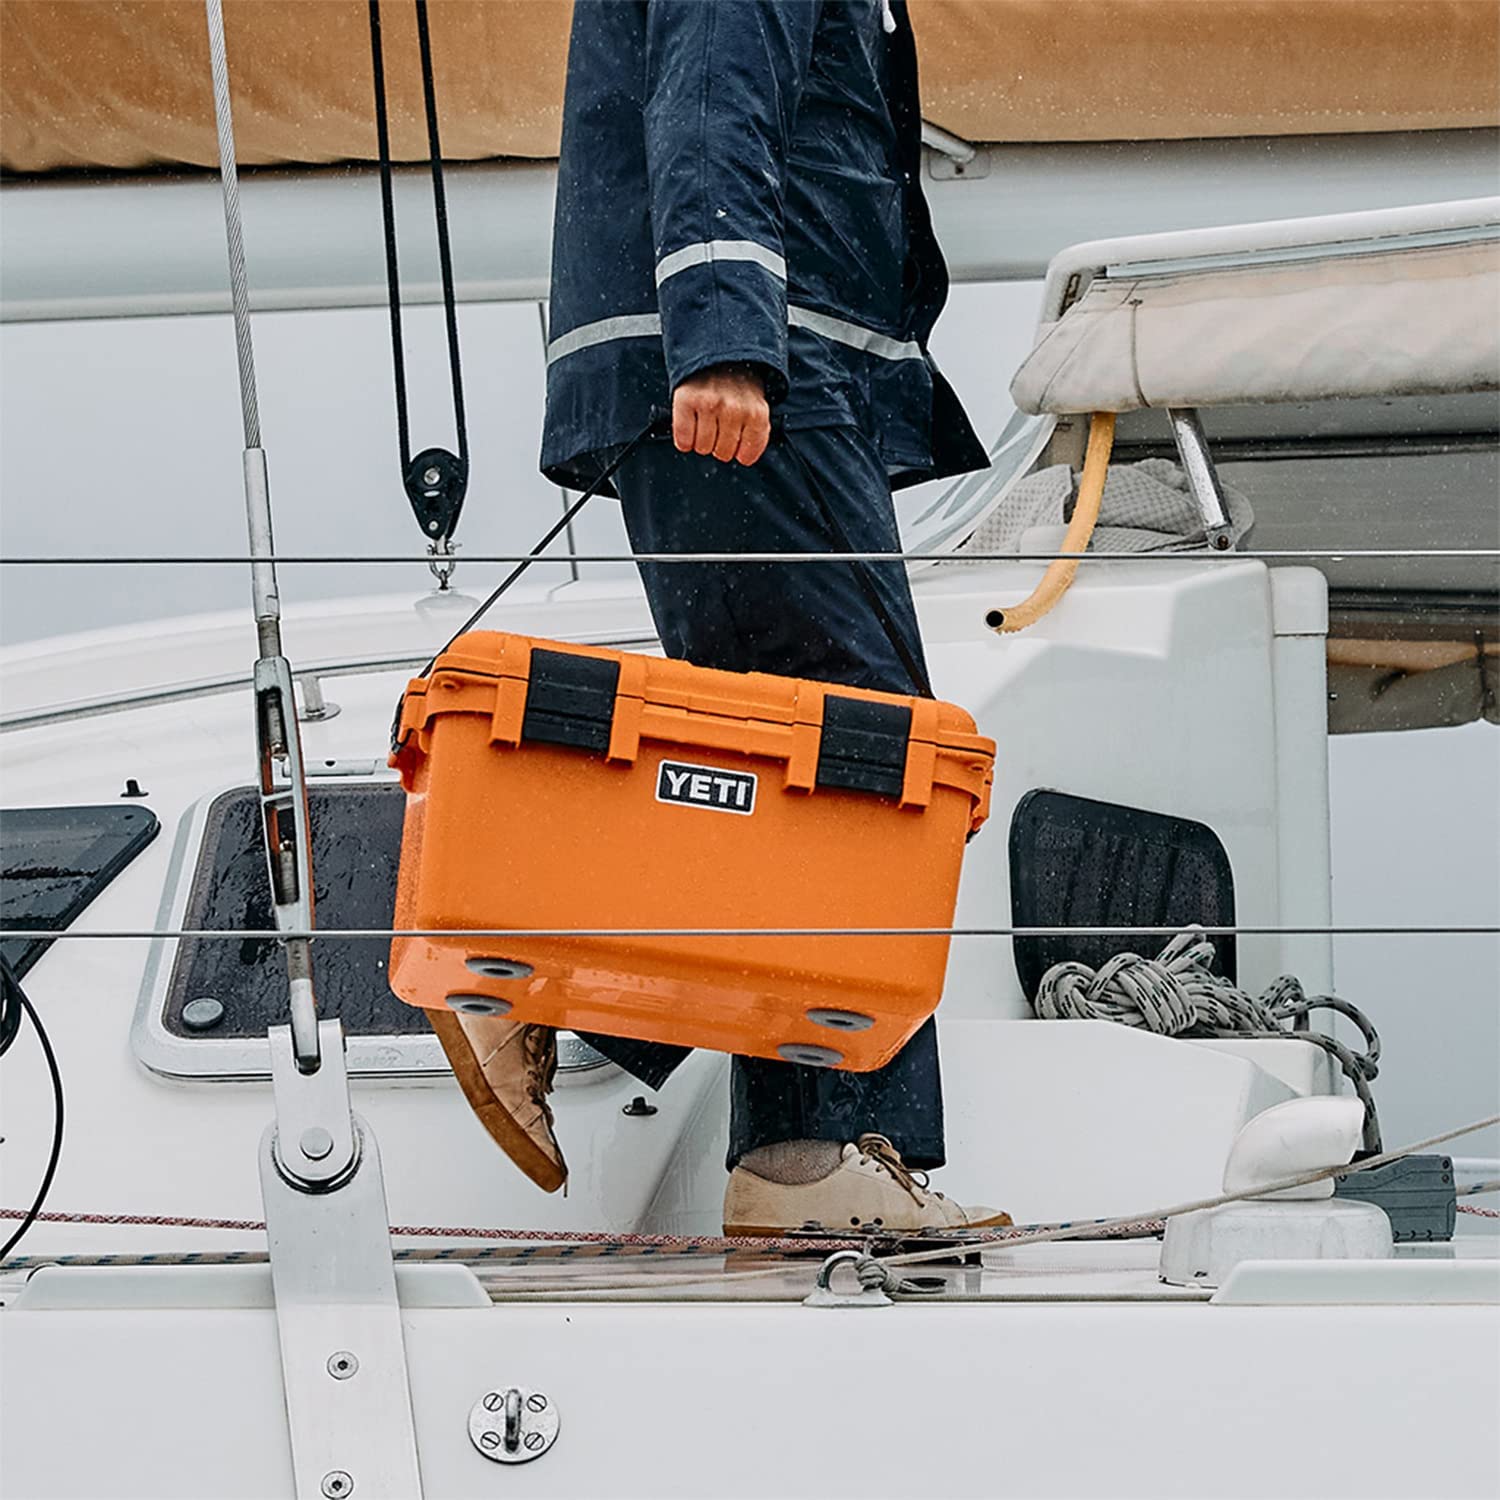 Fisherman with YETI Cargo Box on boat